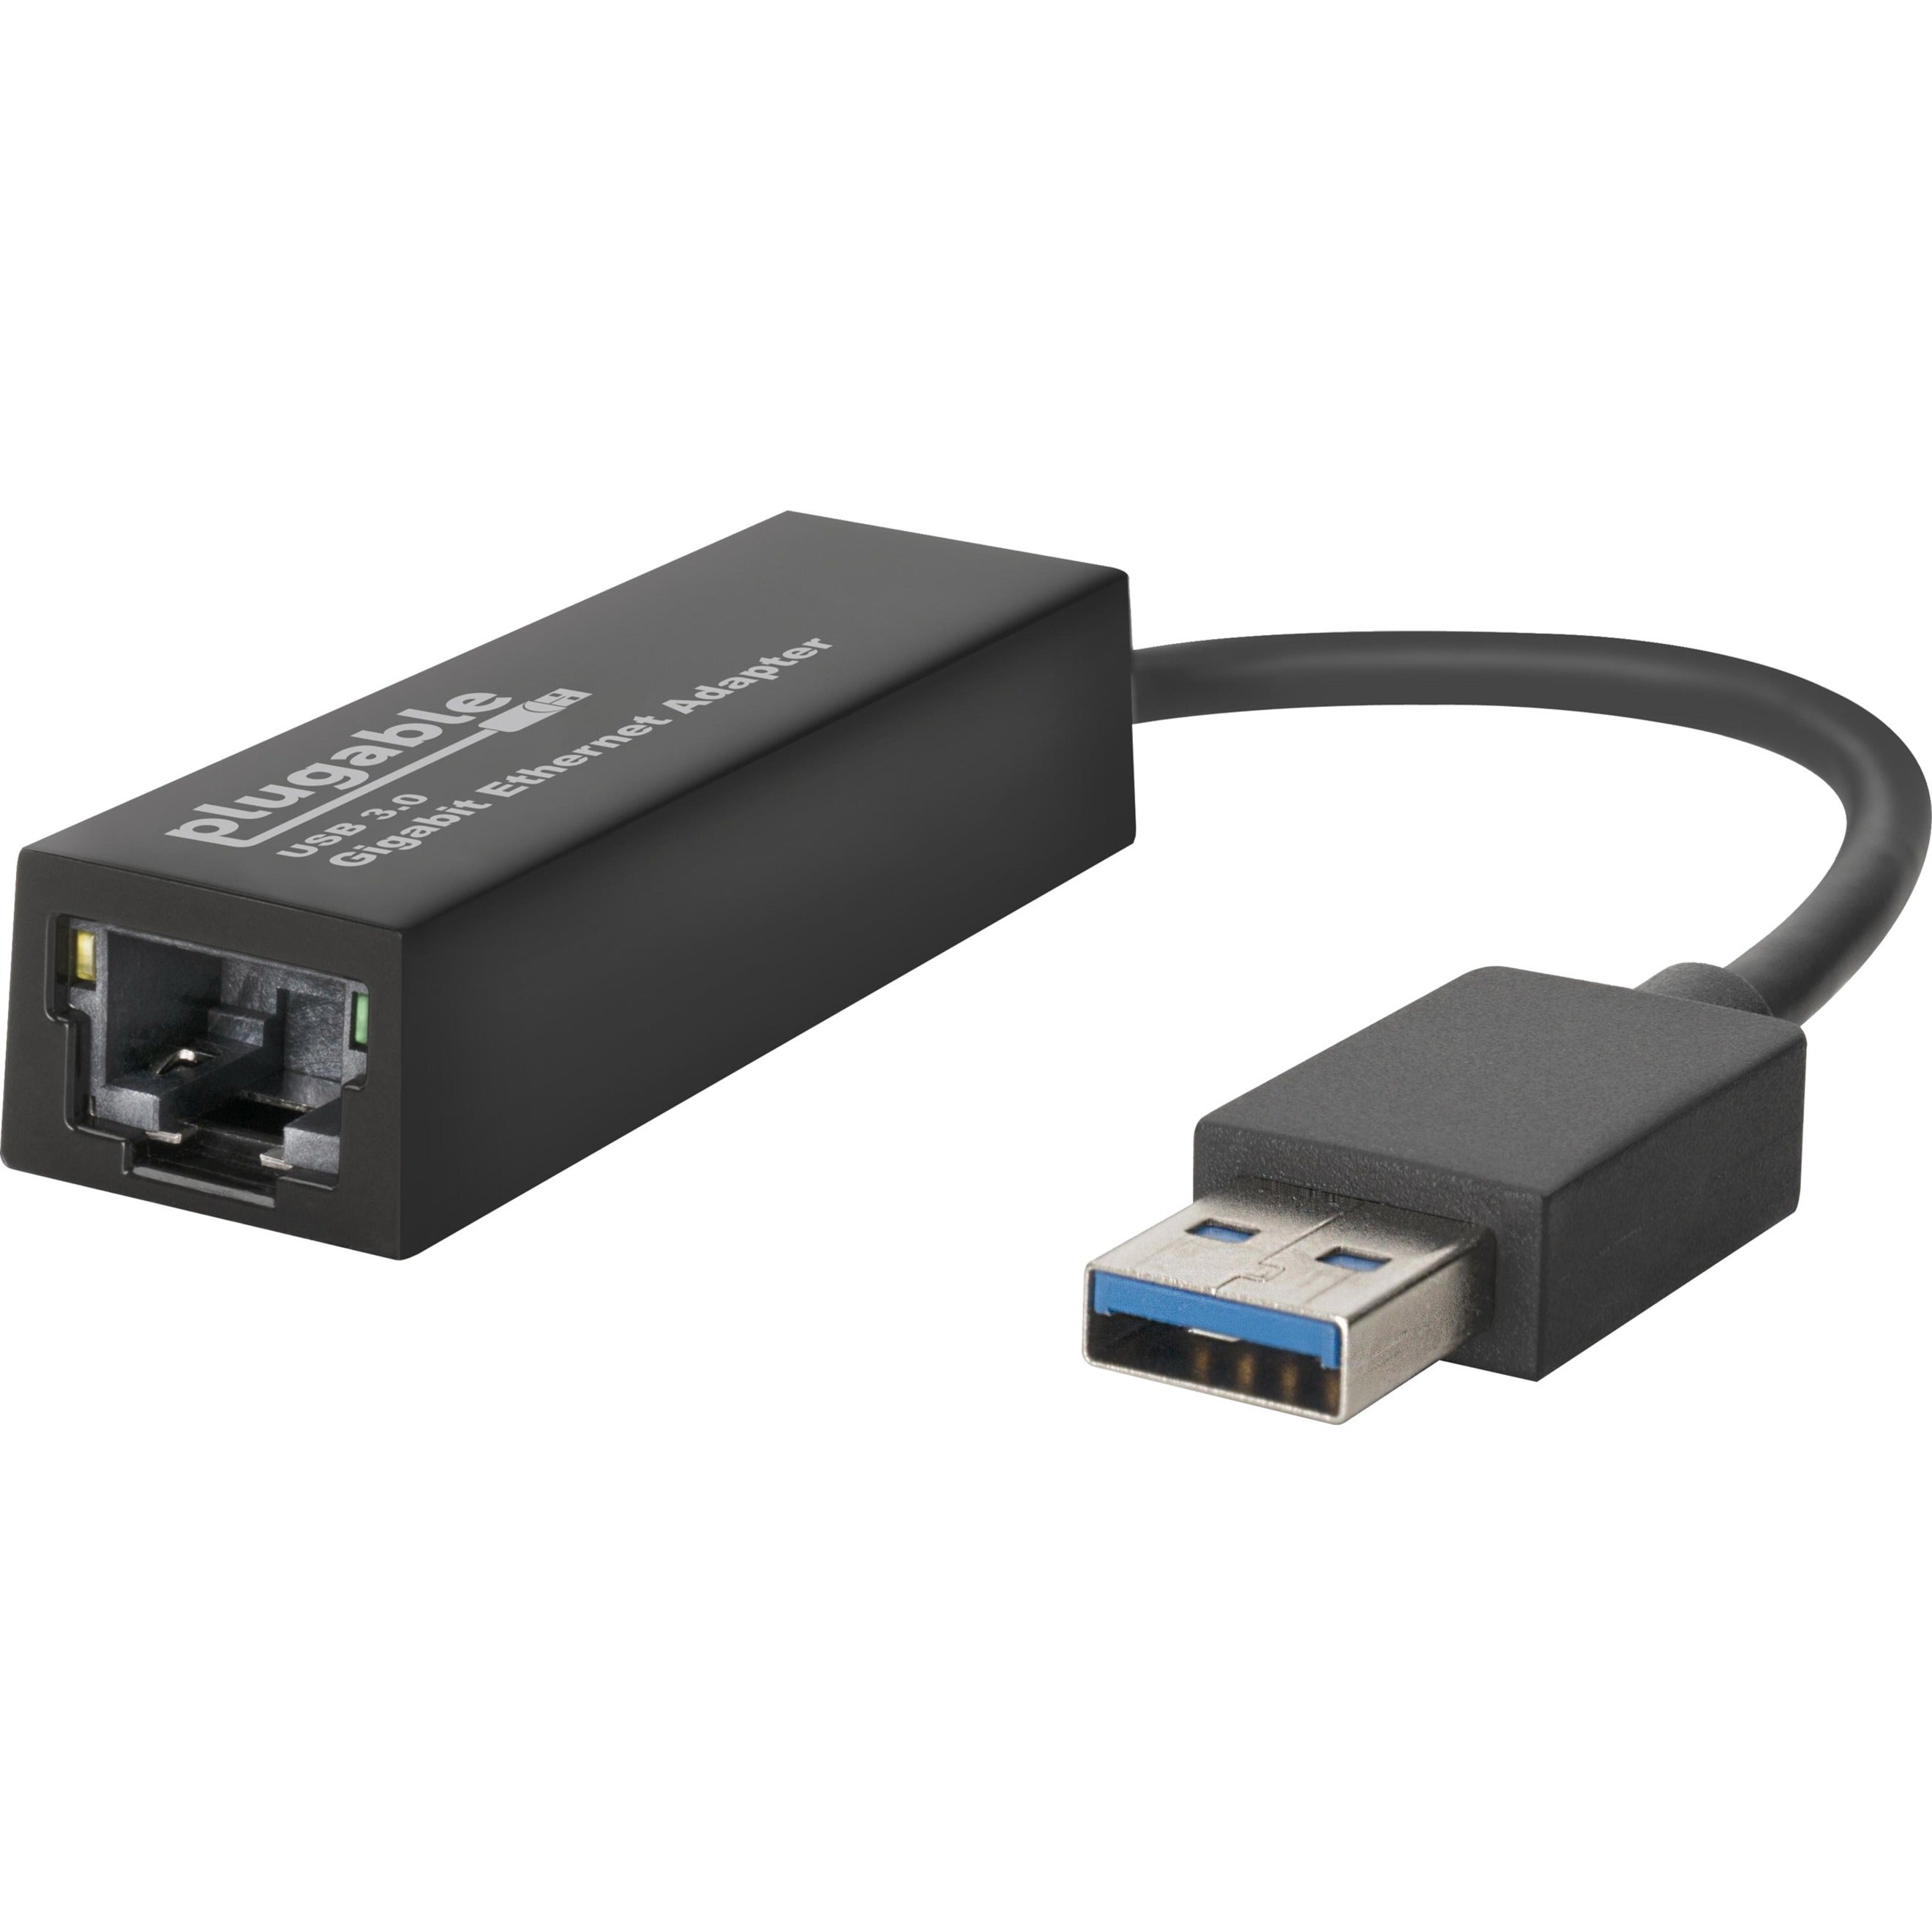 Plugable USB3-E1000 USB to Ethernet Adapter, USB 3.0 to Gigabit Ethernet, High-Speed Data Transfer